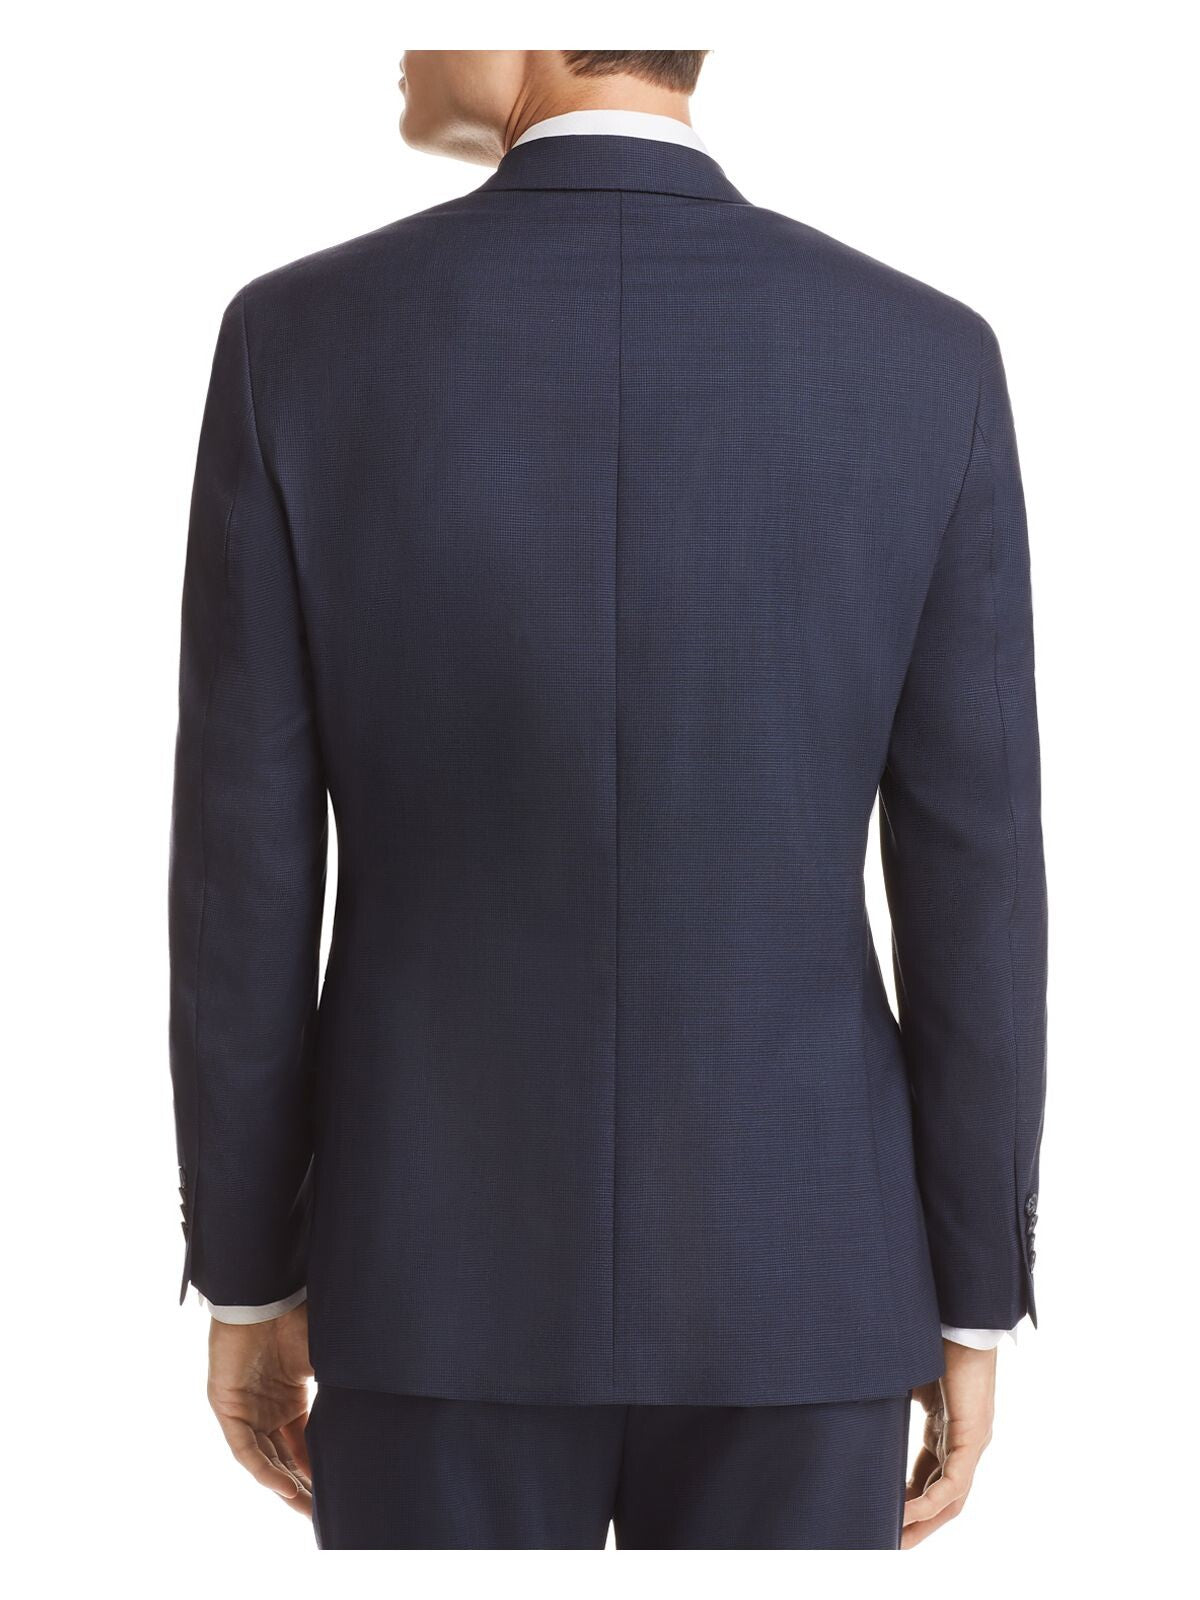 MICHAEL KORS Mens Navy Single Breasted, Classic Fit Wool Blend Suit Separate Blazer Jacket 42 SHORT